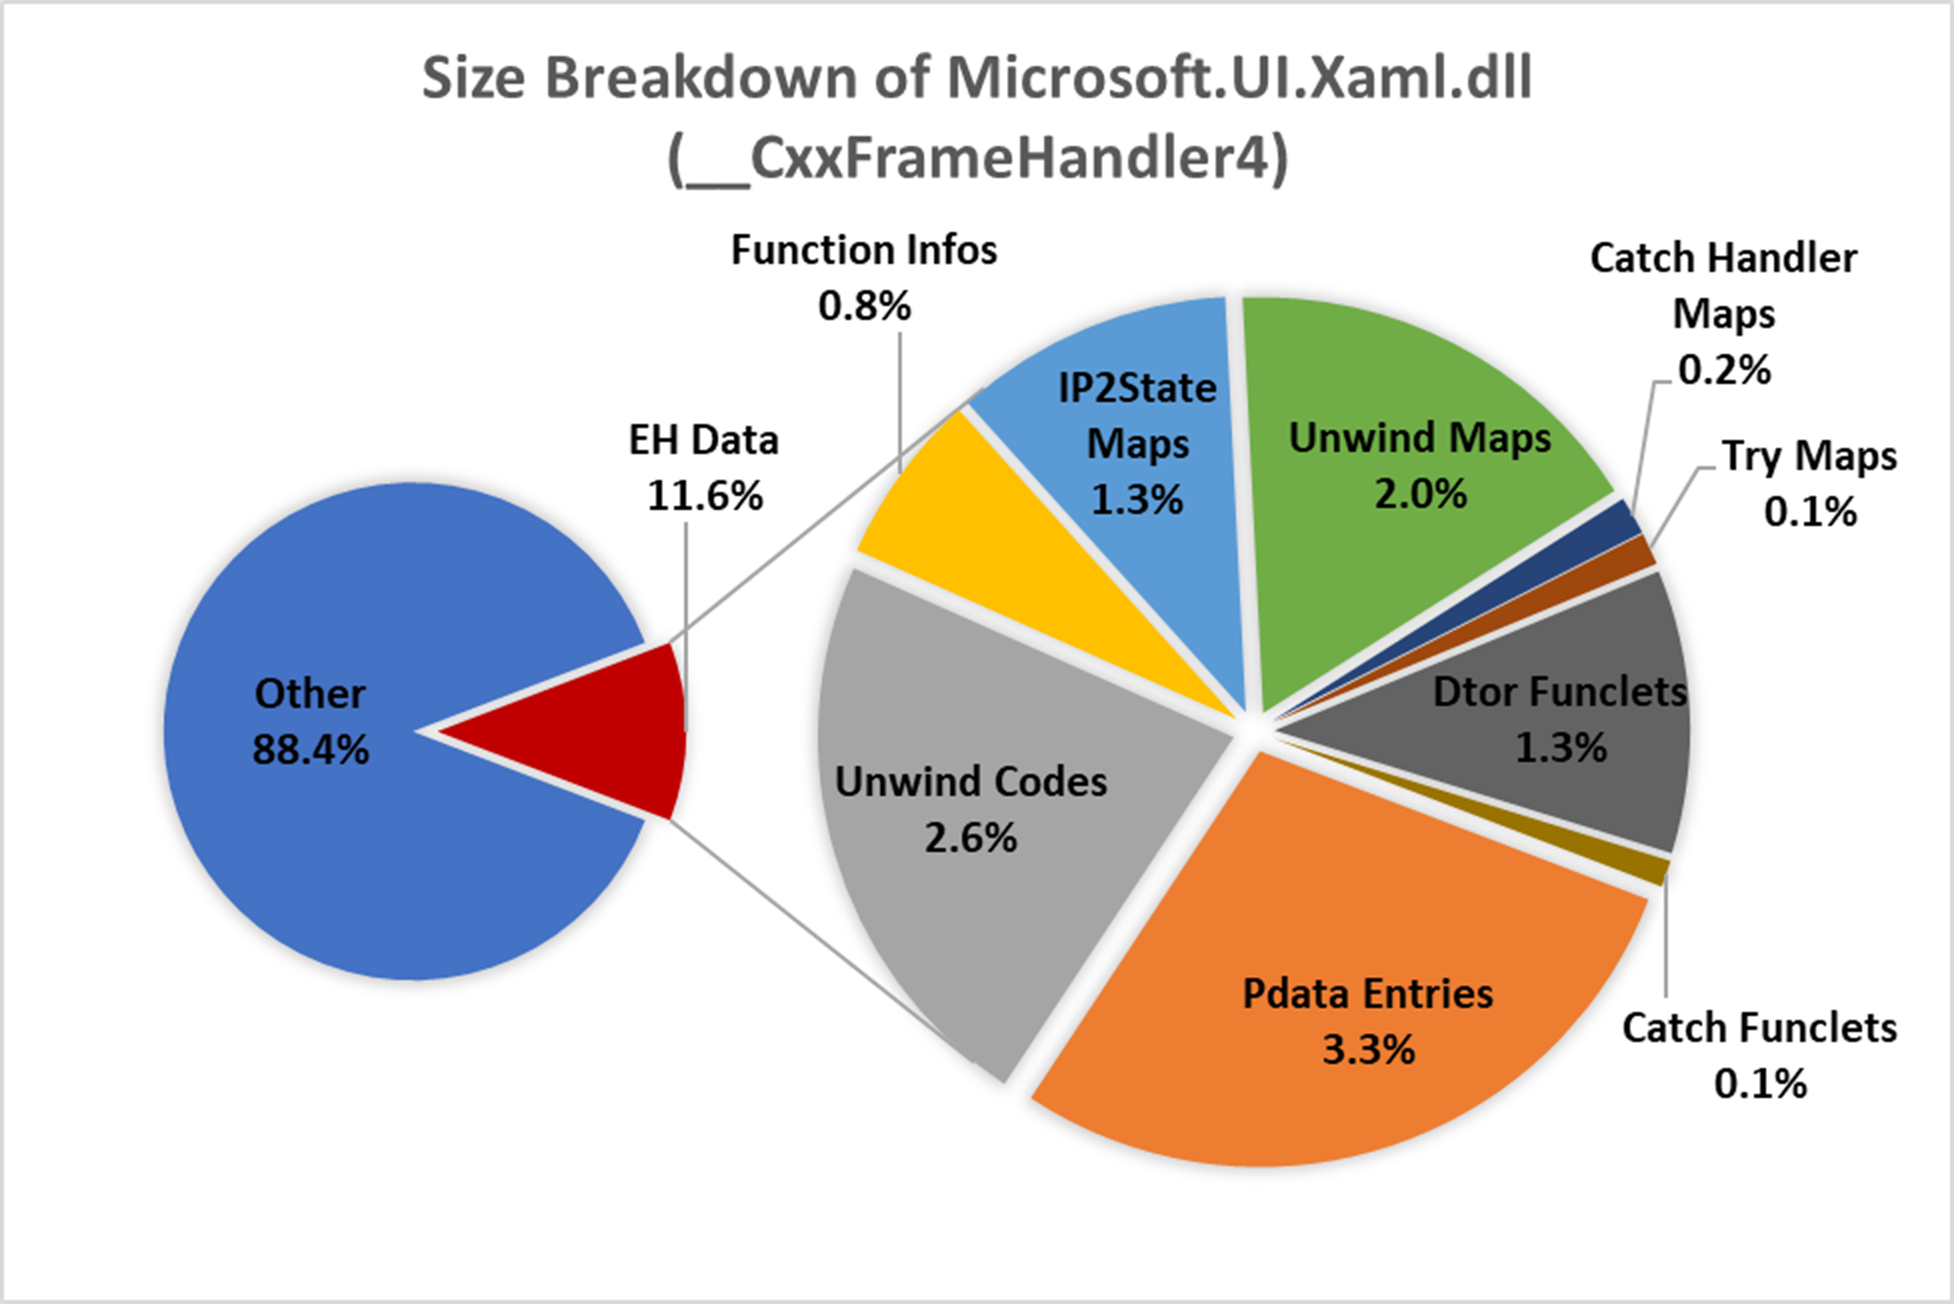 Size Breakdown of Microsoft.UI.Xaml.dll using __CxxFrameHandler4